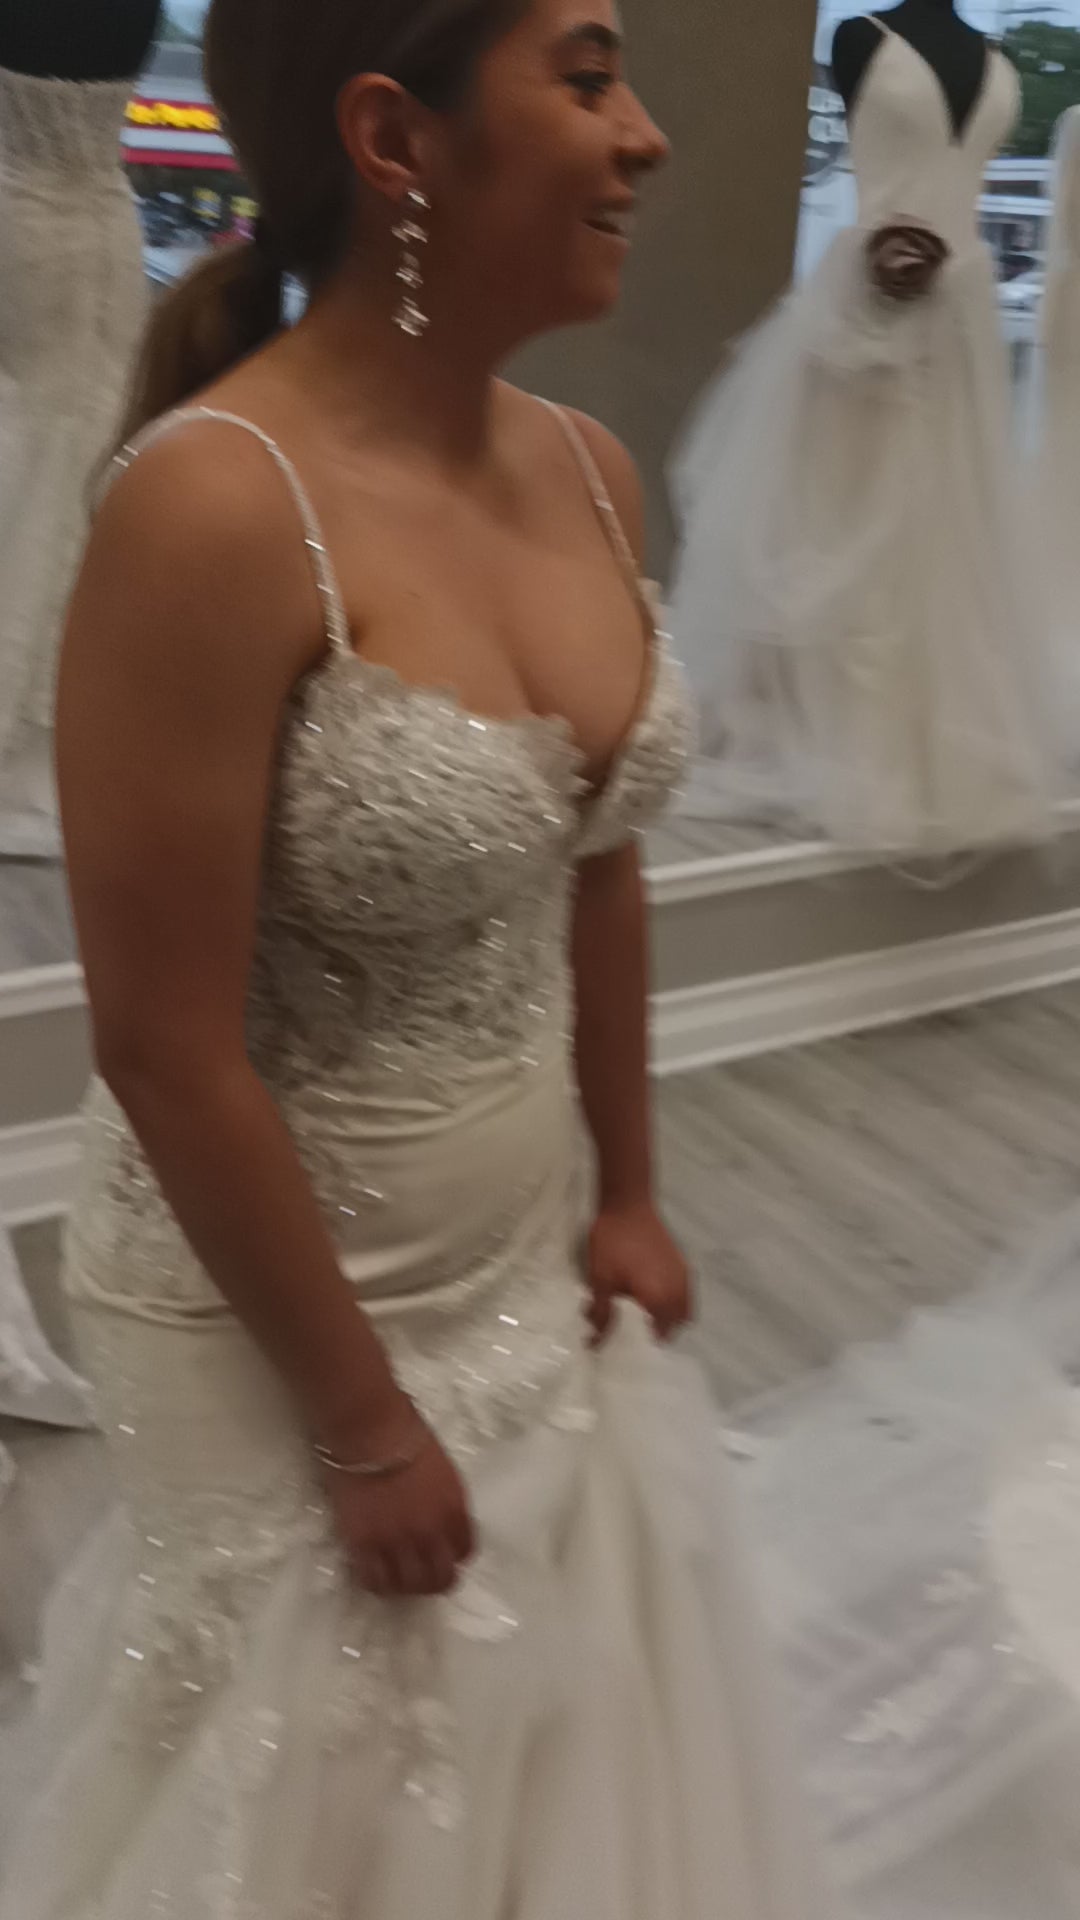 Martina Liana Wedding Gown - 10